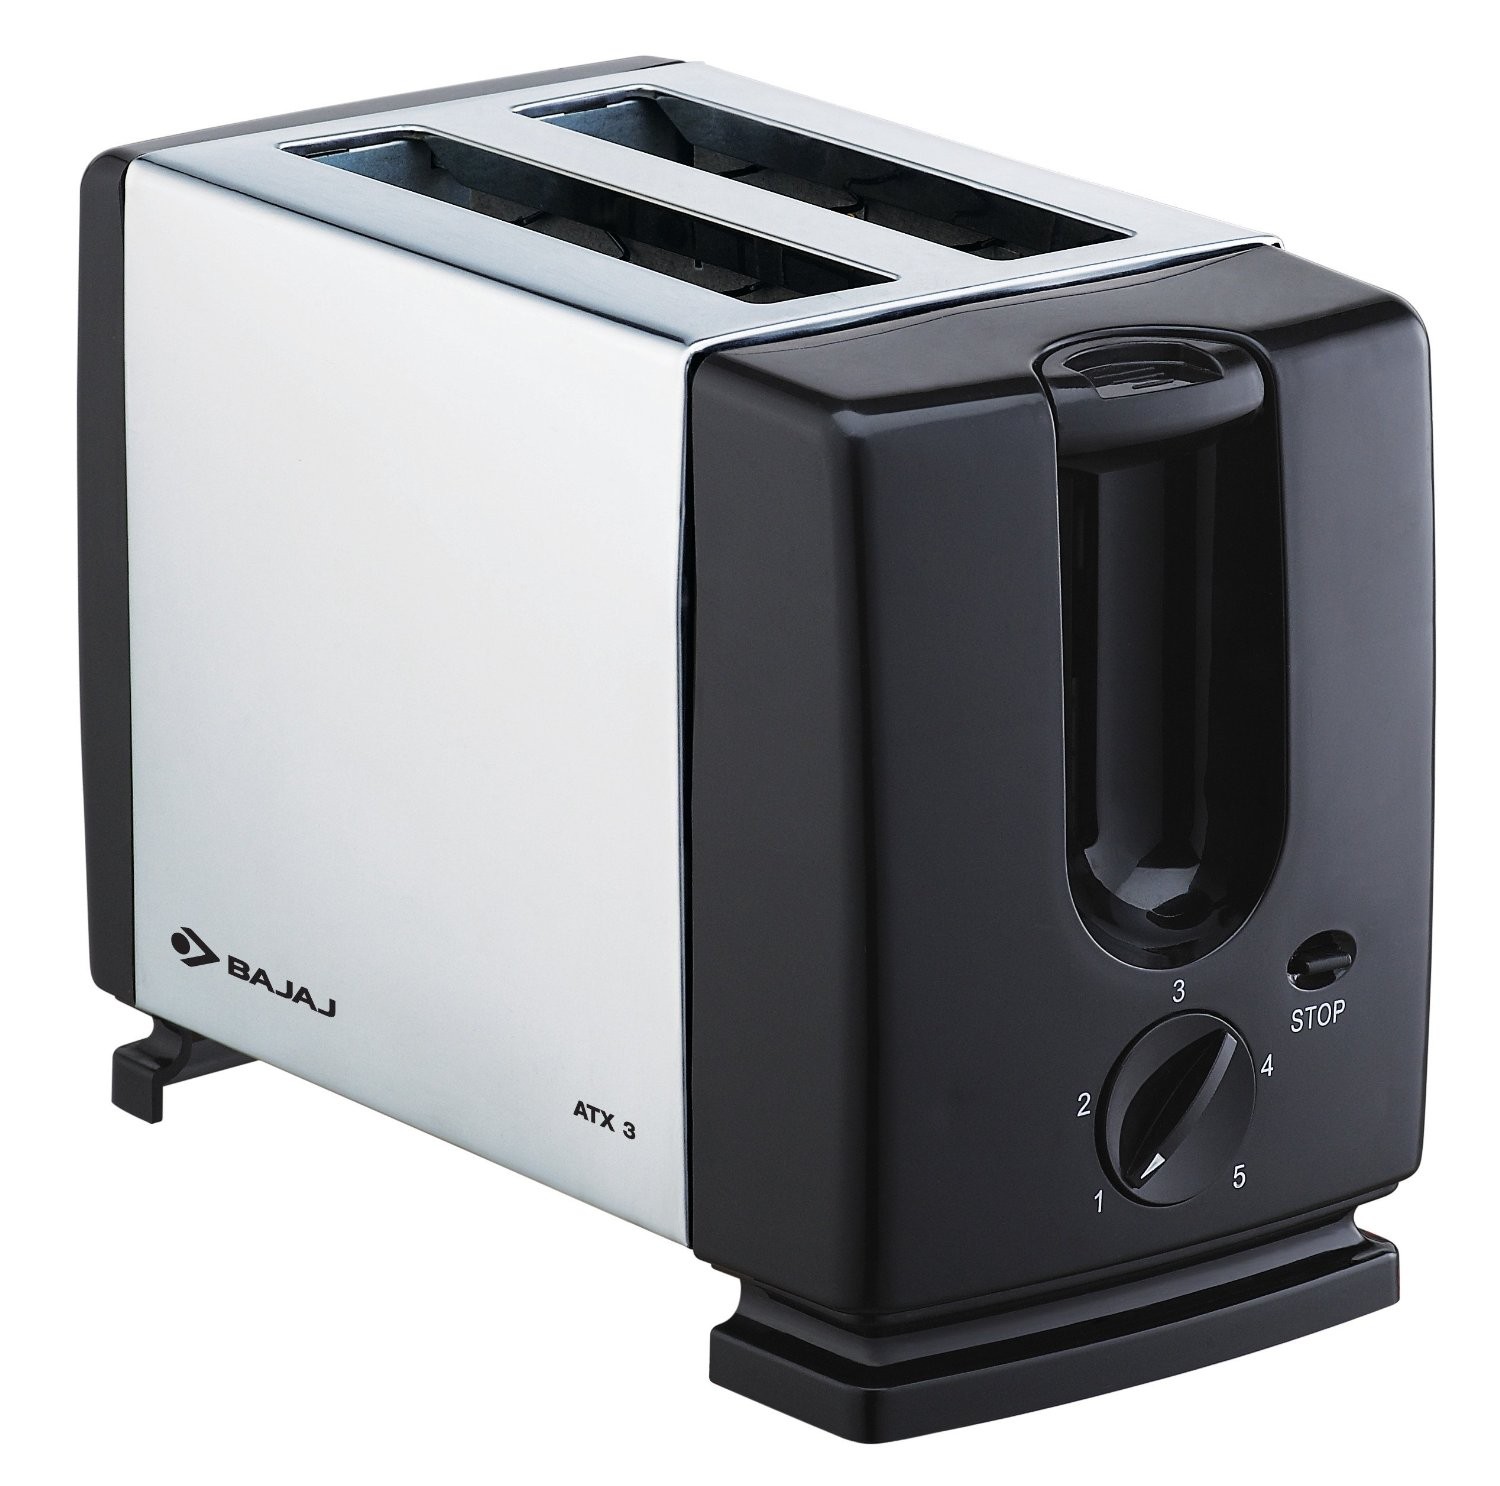 Bajaj Toaster ATX3